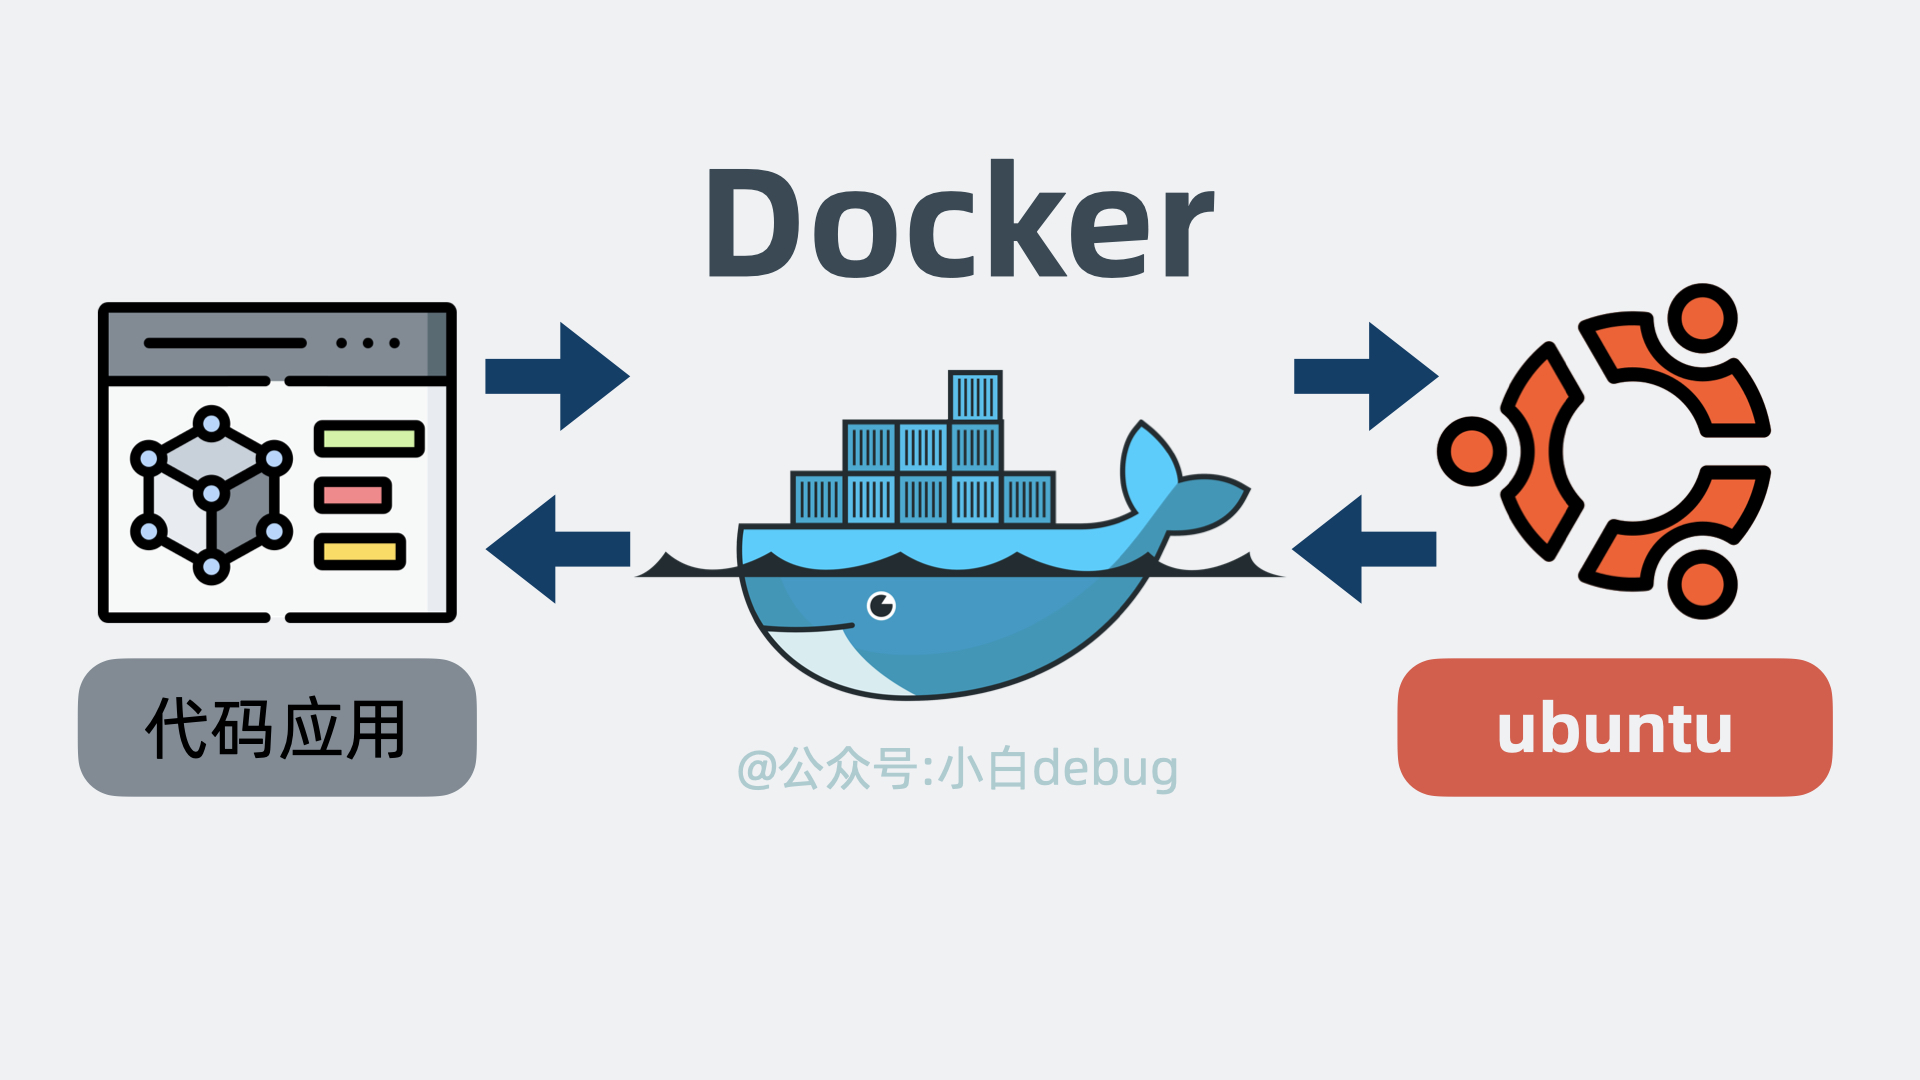 Docker 是什么？ 和 Kubernetes(k8s) 之间是什么关系？